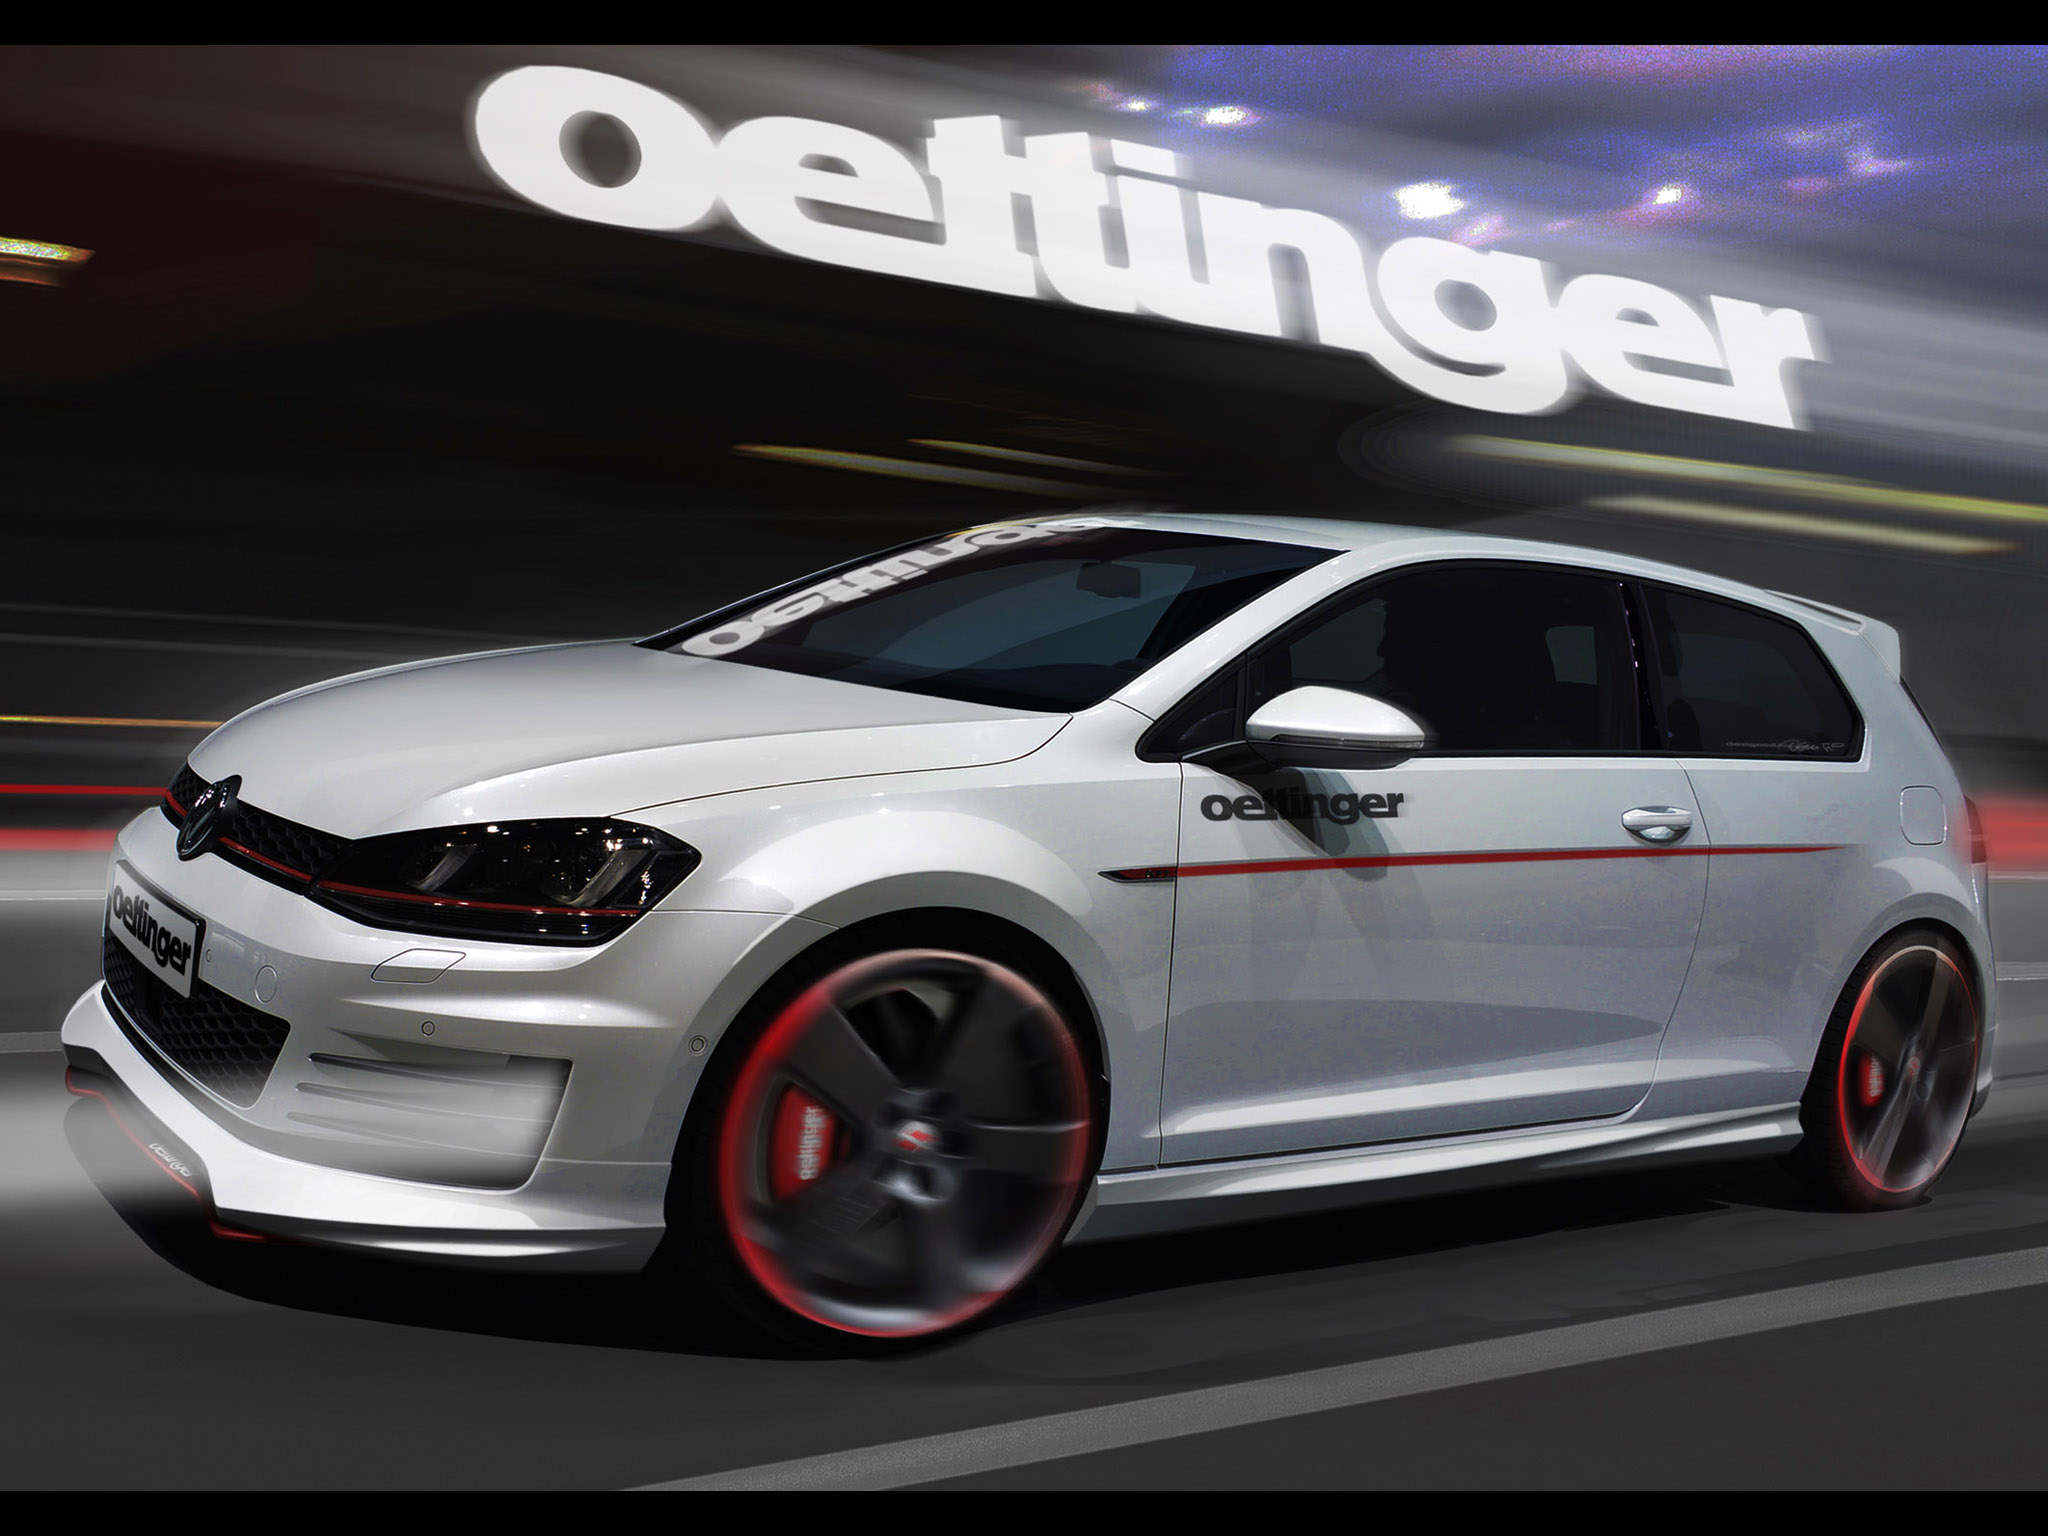 Oettinger Volkswagen Golf Gti Tuning Wallpaper